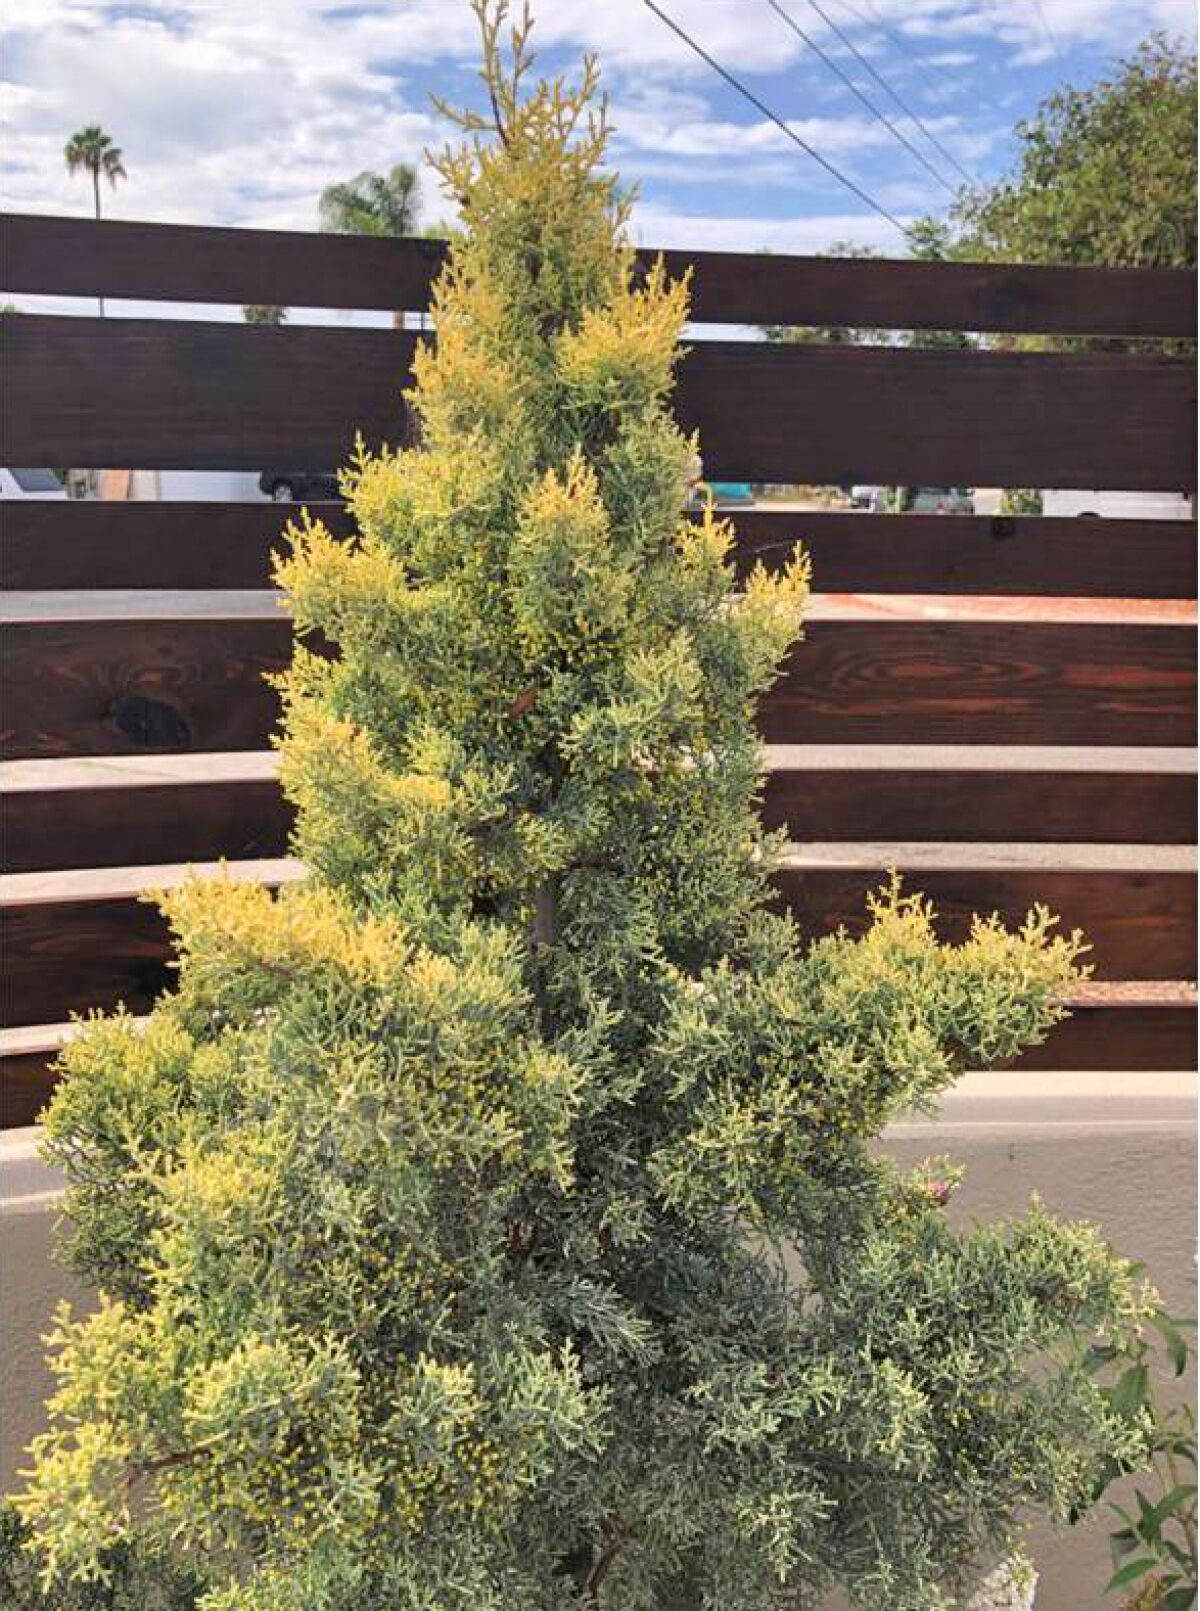 A Golden Arizona cypress in a yard.